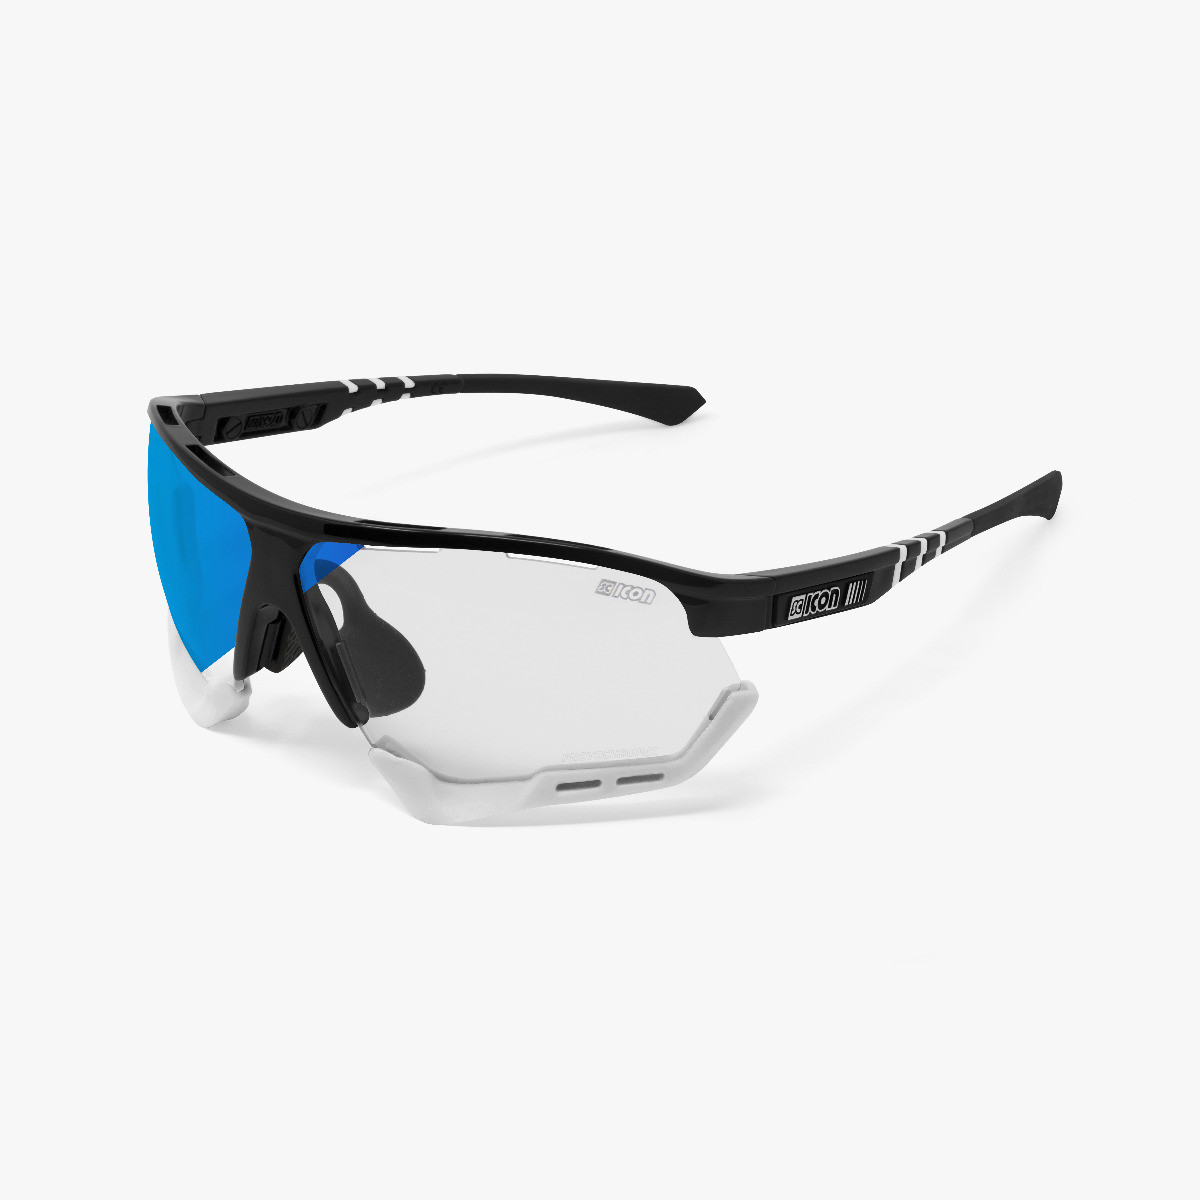 Aerocomfort cycling sunglasses scnxt photochromic black frame blue lenses EY19130202
